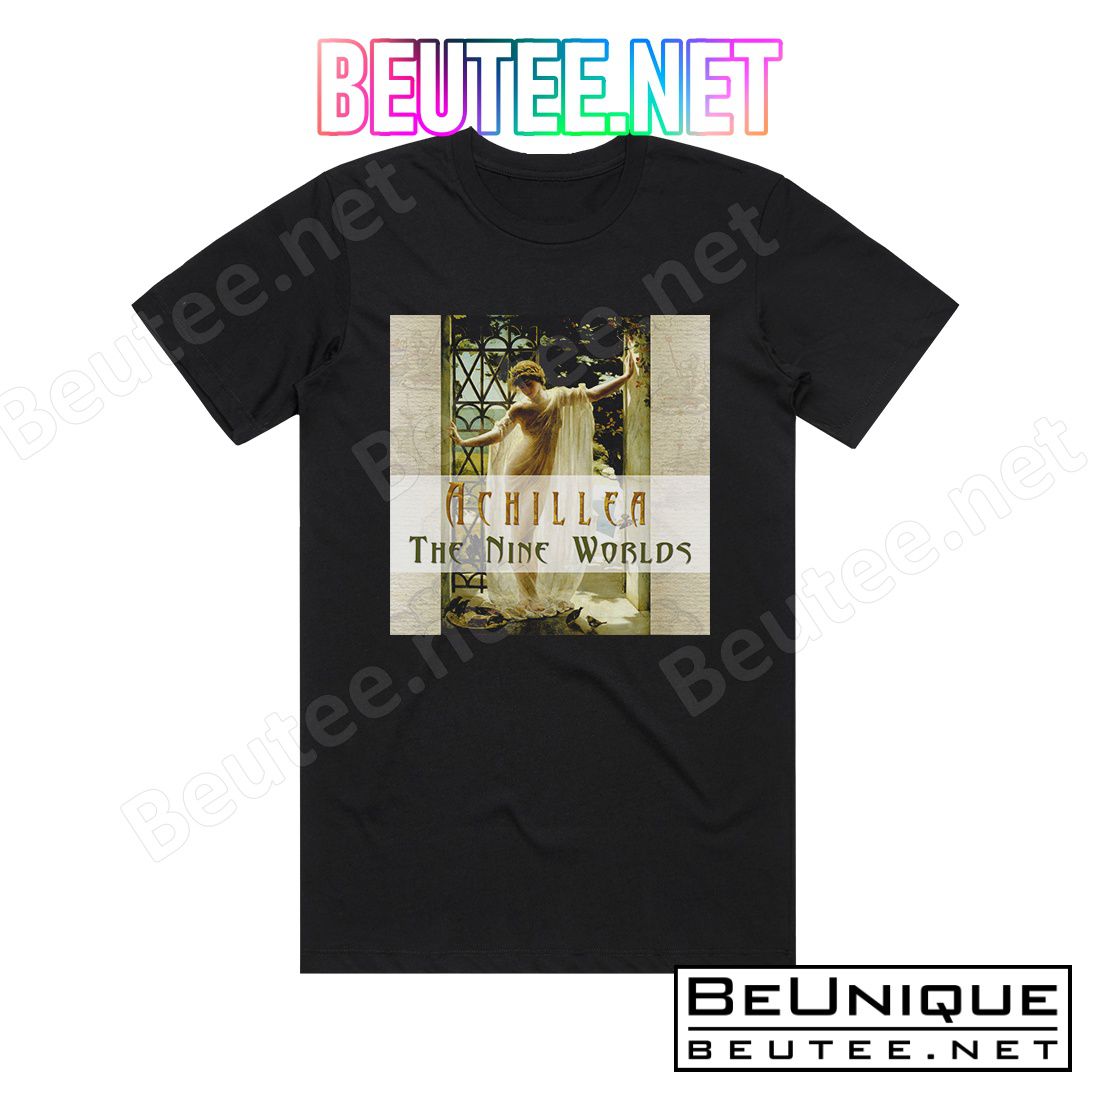 Achillea The Nine Worlds 2 Album Cover T-Shirt